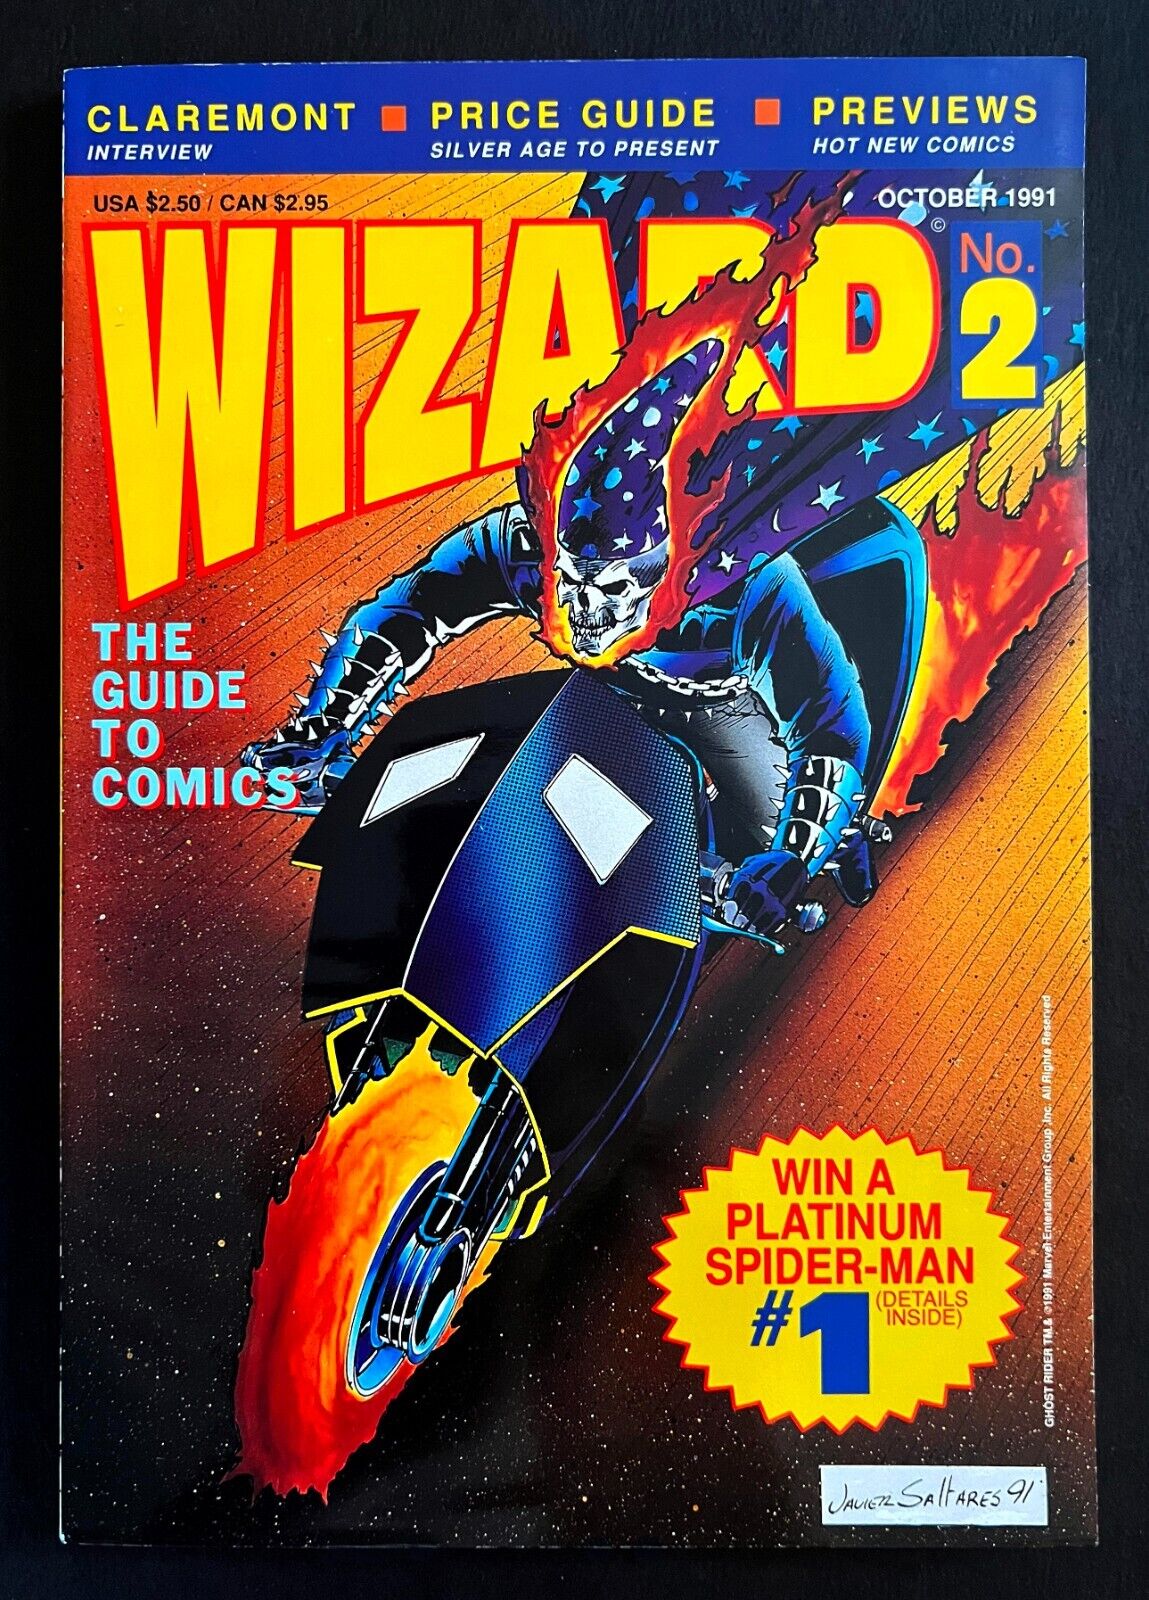 WIZARD: THE GUIDE TO COMICS #2 Hi-Grade SPIDER-MAN #1 Platinum Ad 1991